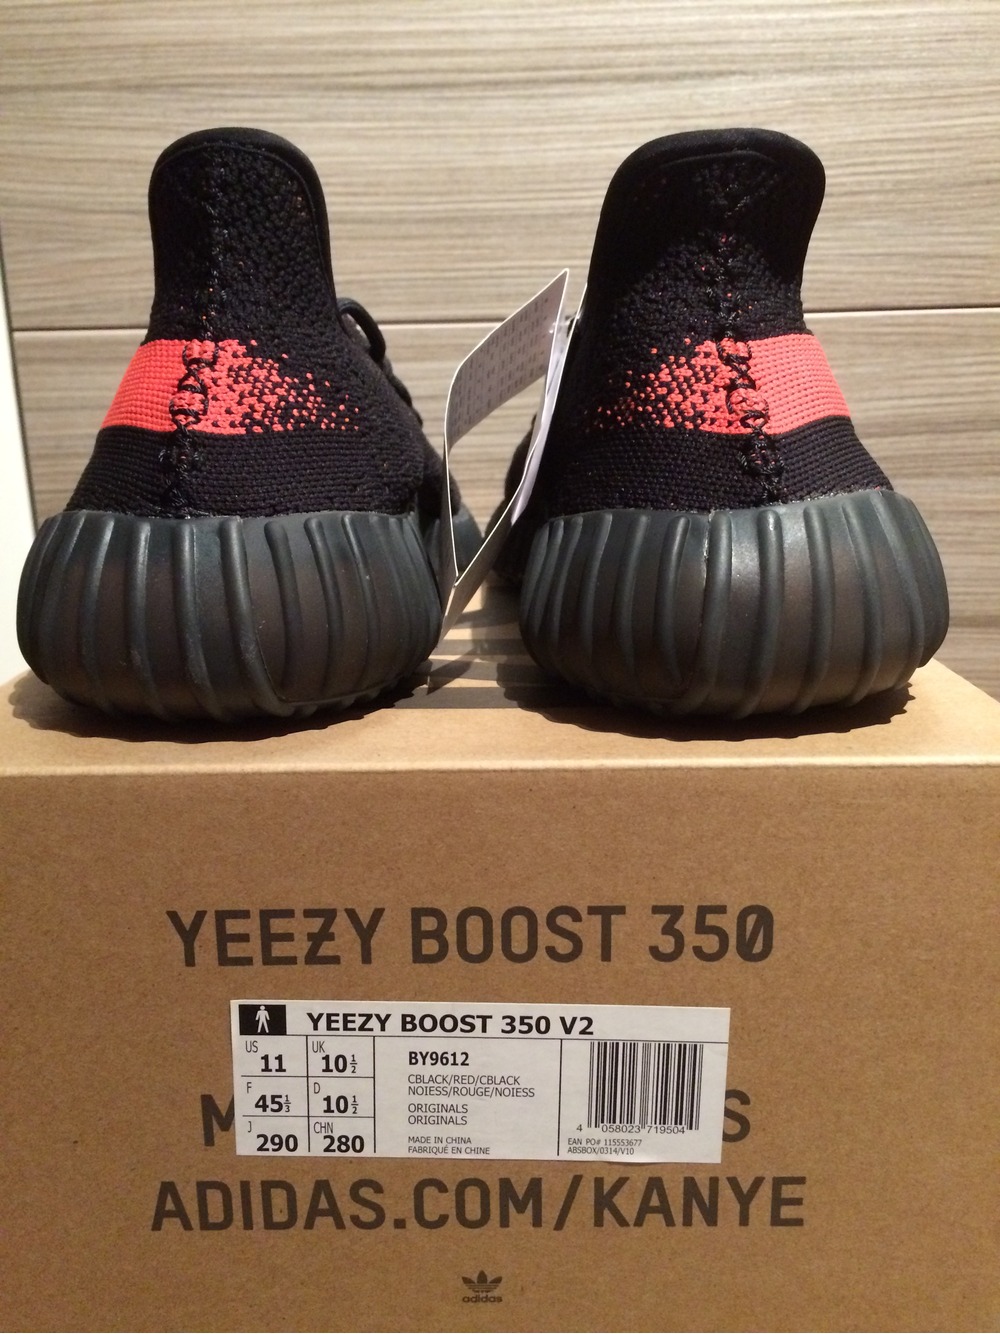 Adidas Yeezy 350 v2 'Black / Red' Online Raffles - Sneaker Shouts